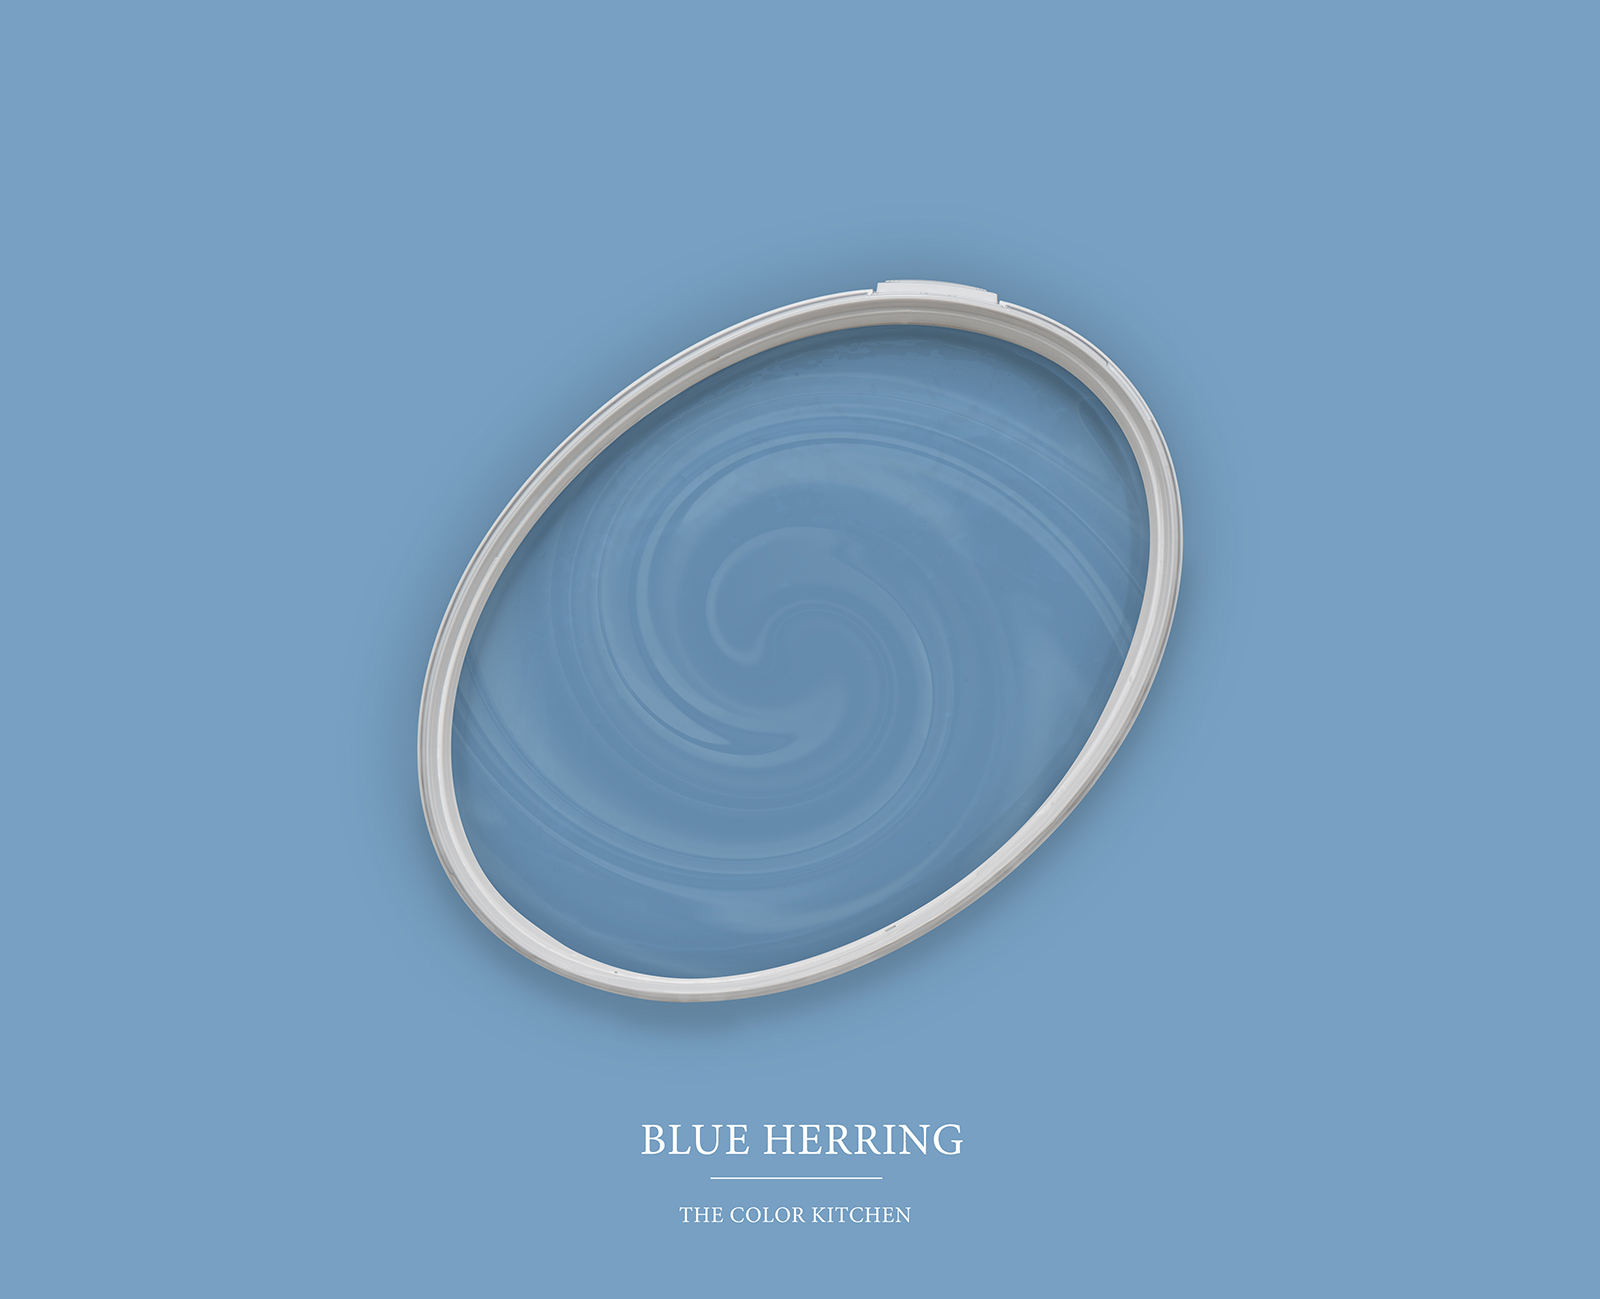         Wandfarbe TCK3004 »Blue Herring« in strahlendem Taubenblau – 2,5 Liter
    